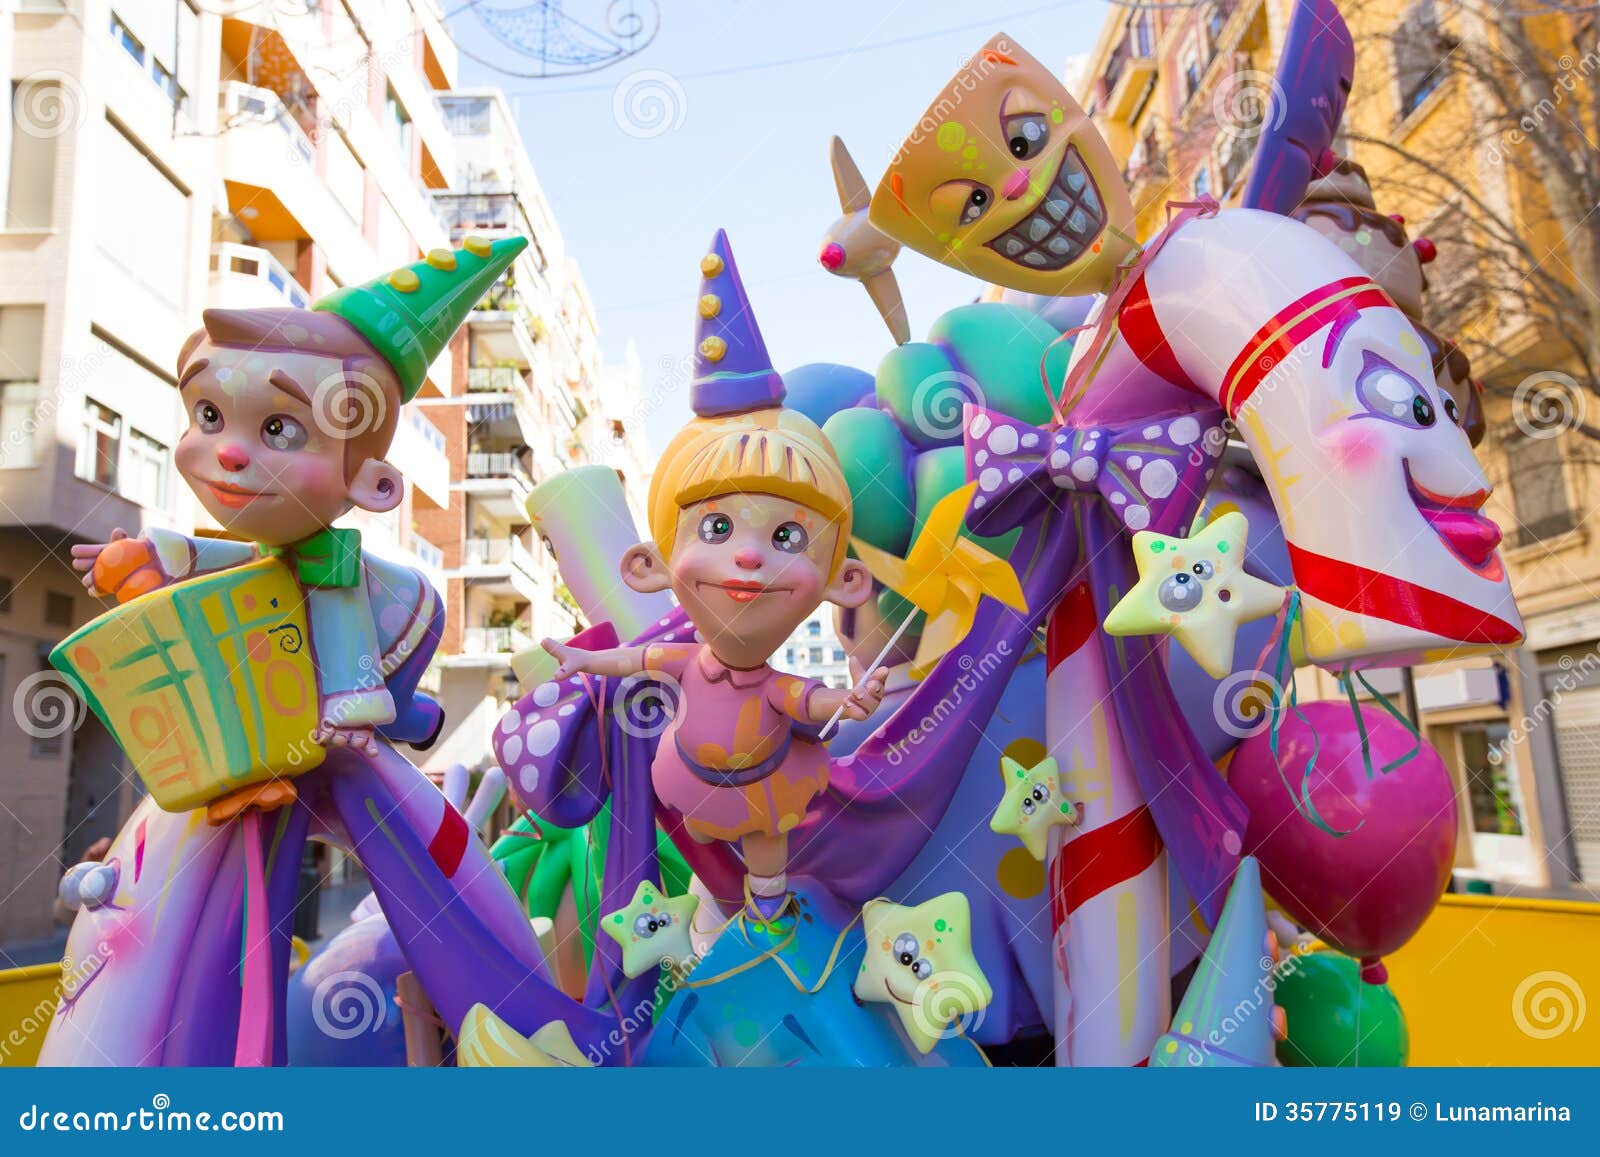 fallas is a popular fest in valencia spain figures will be burned